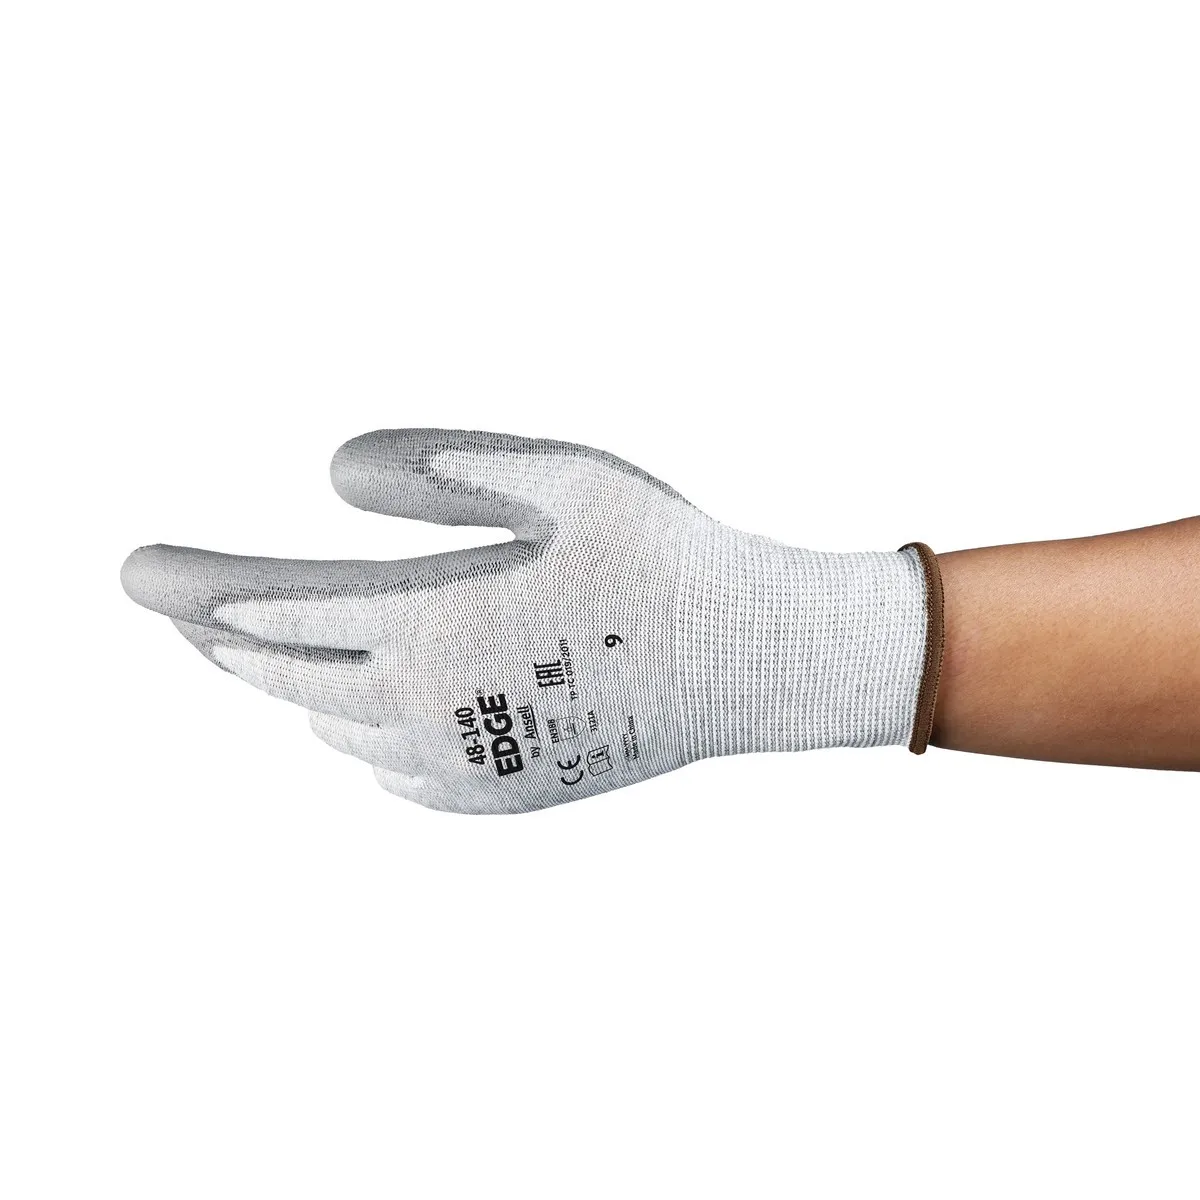 Zaštitne rukavice EDGE 48-140 sive - Ansell - PAR 